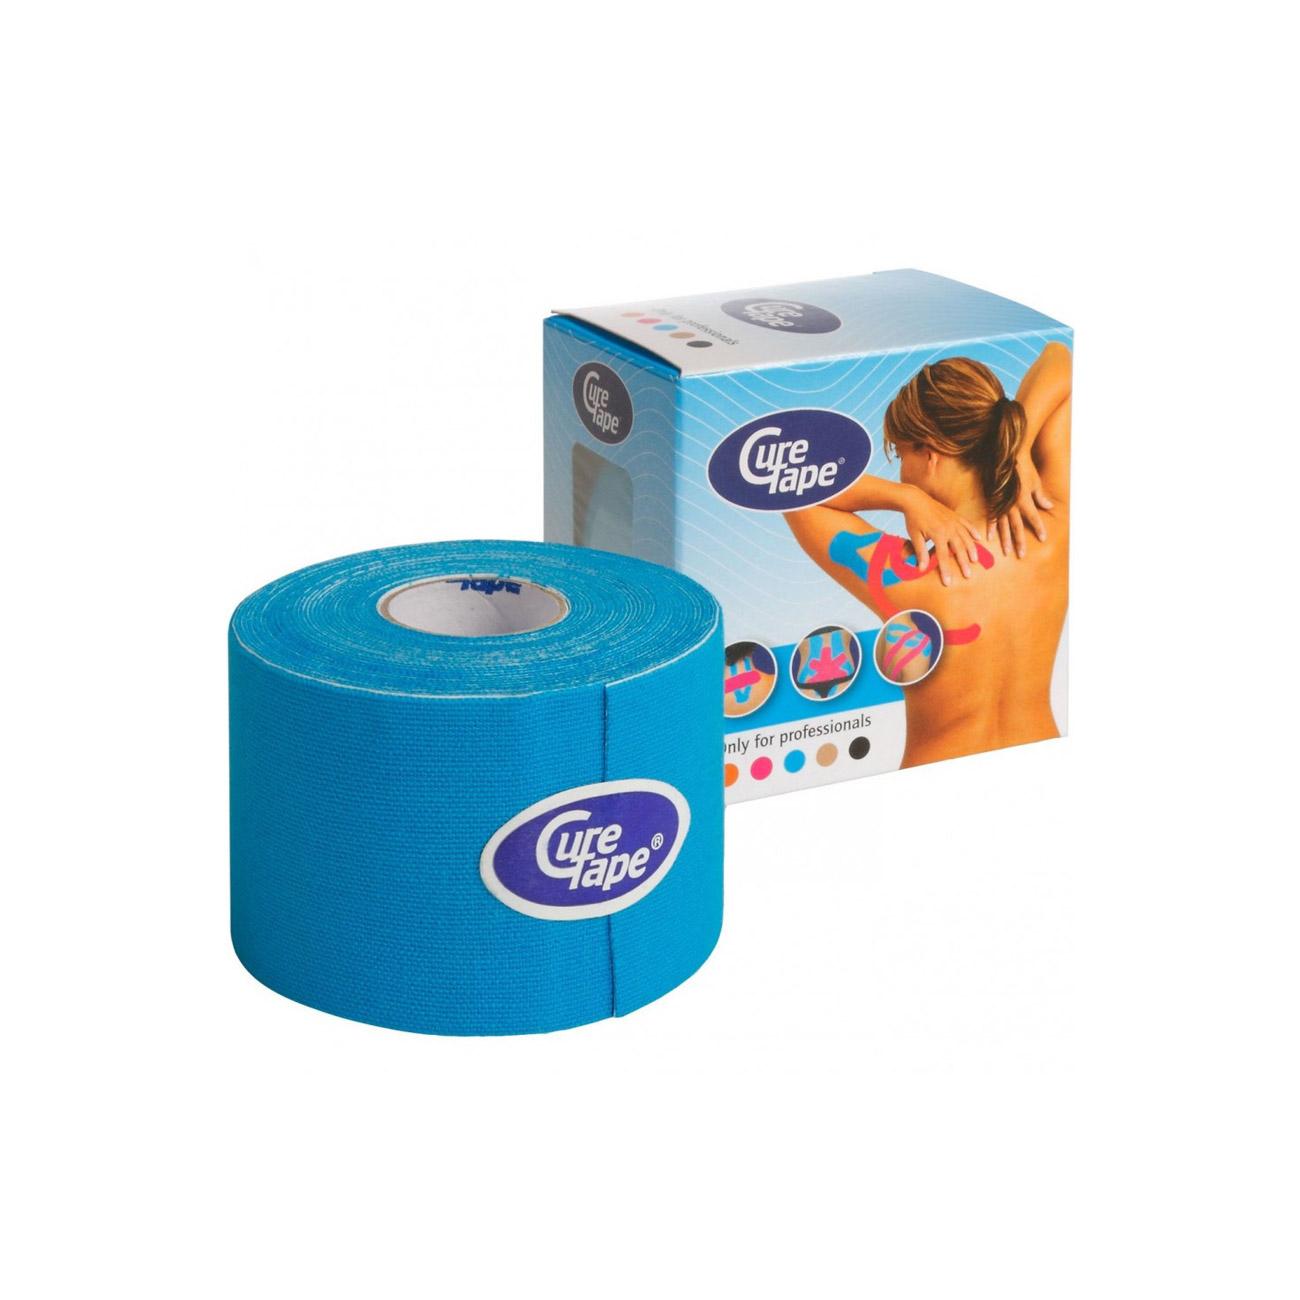 Kaliber huiselijk entiteit Cure Tape 5 cm x 5 m blauw kopen? | Bestel direct bij ESE International